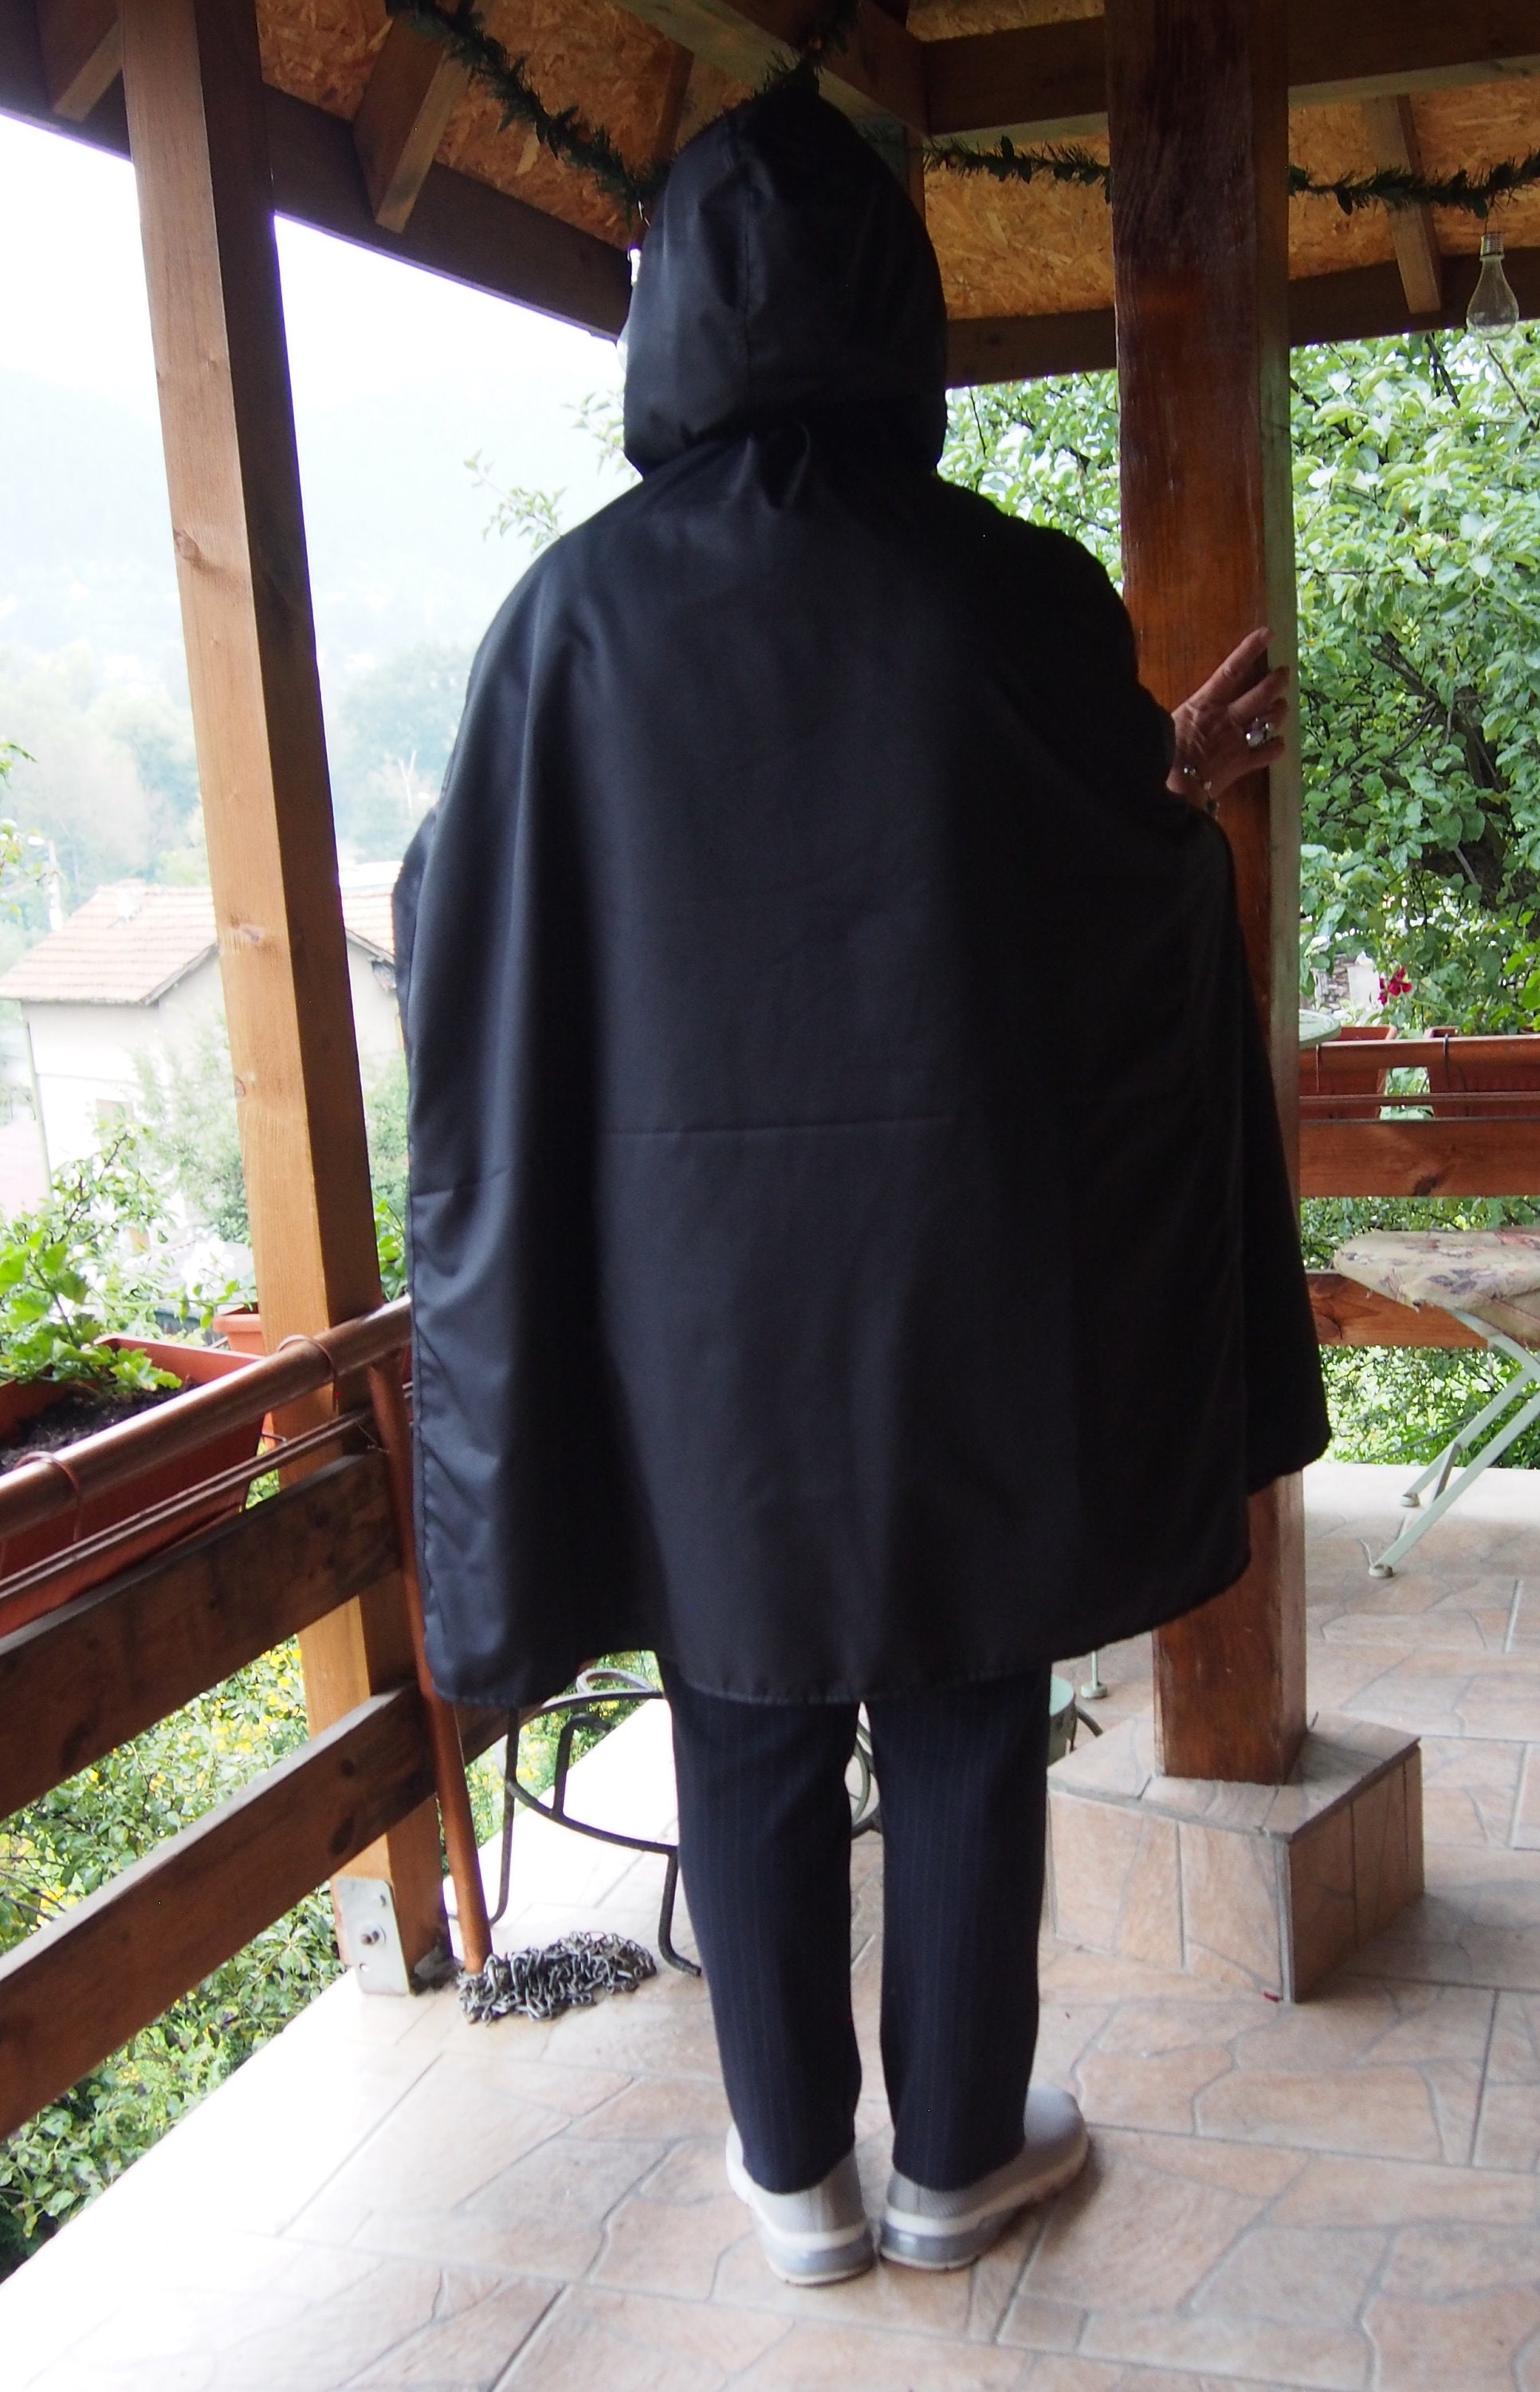 Capa de lluvia de talla grande, Poncho de lluvia para mujer, impermeable  con capucha, chaqueta gótica de talla grande, ropa futurista -  México